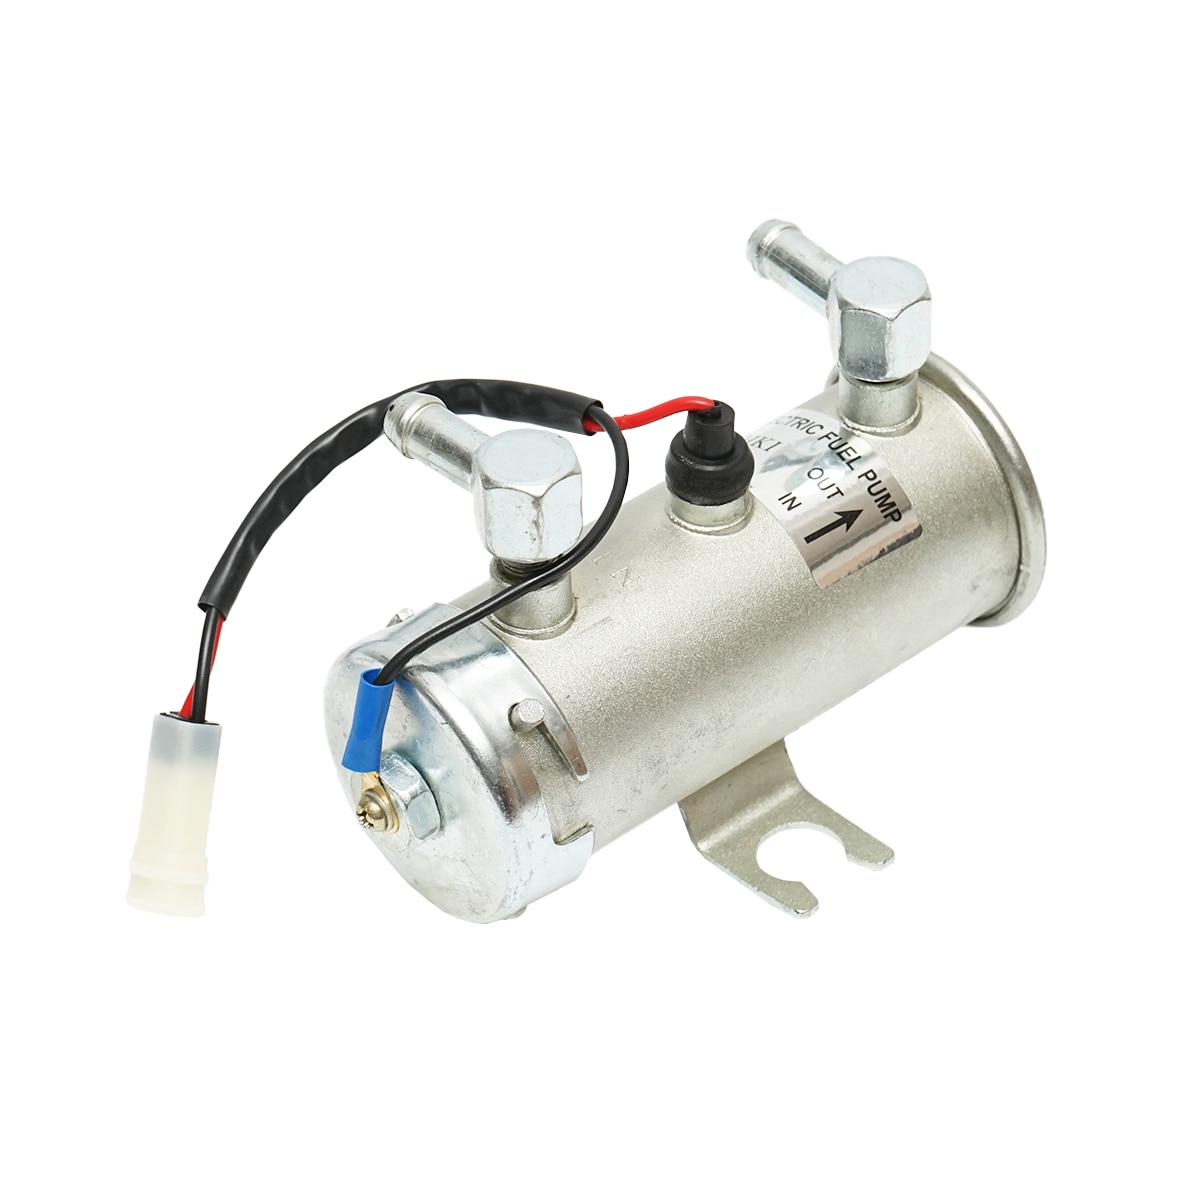 Pompa alimentare electrica universala 12V, L 145mm, fi 10mm pentru motorina  sau benzina YK-3111, 4HKI 